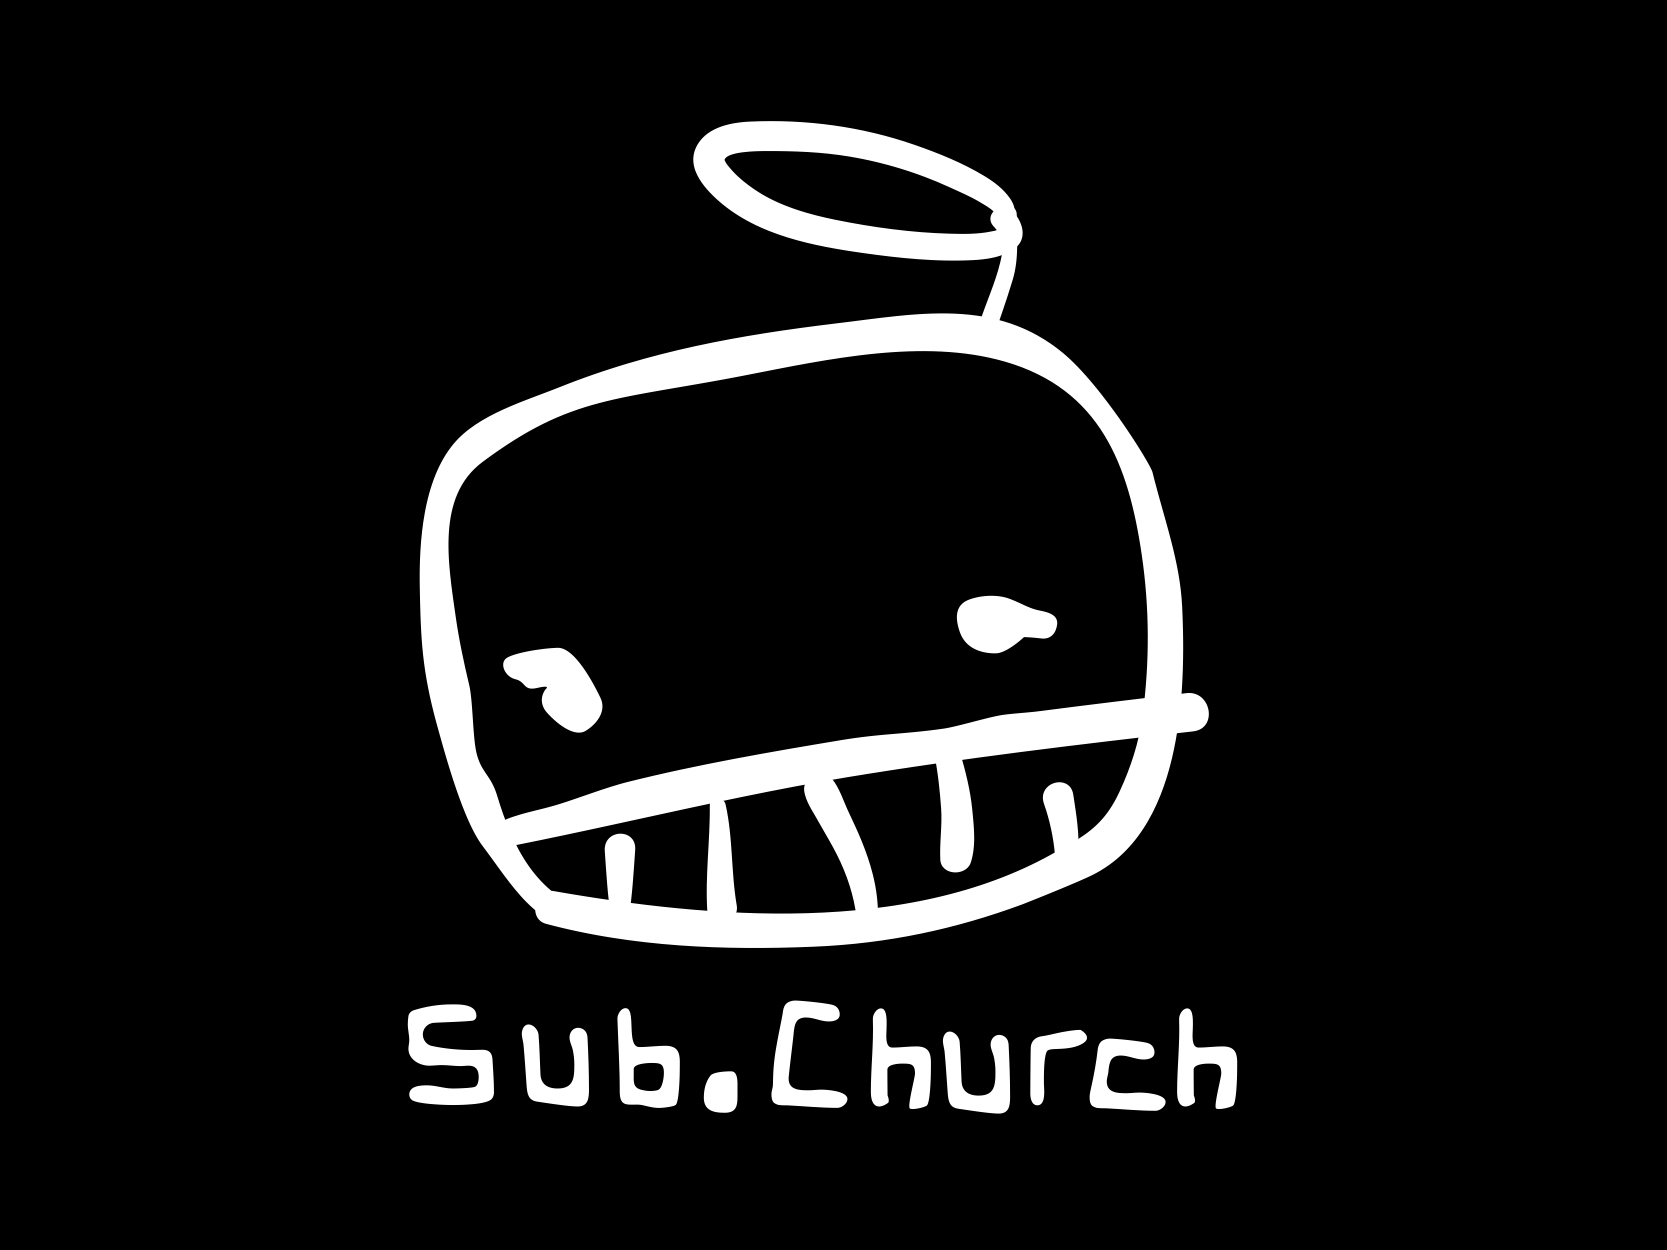 Subchurch logo